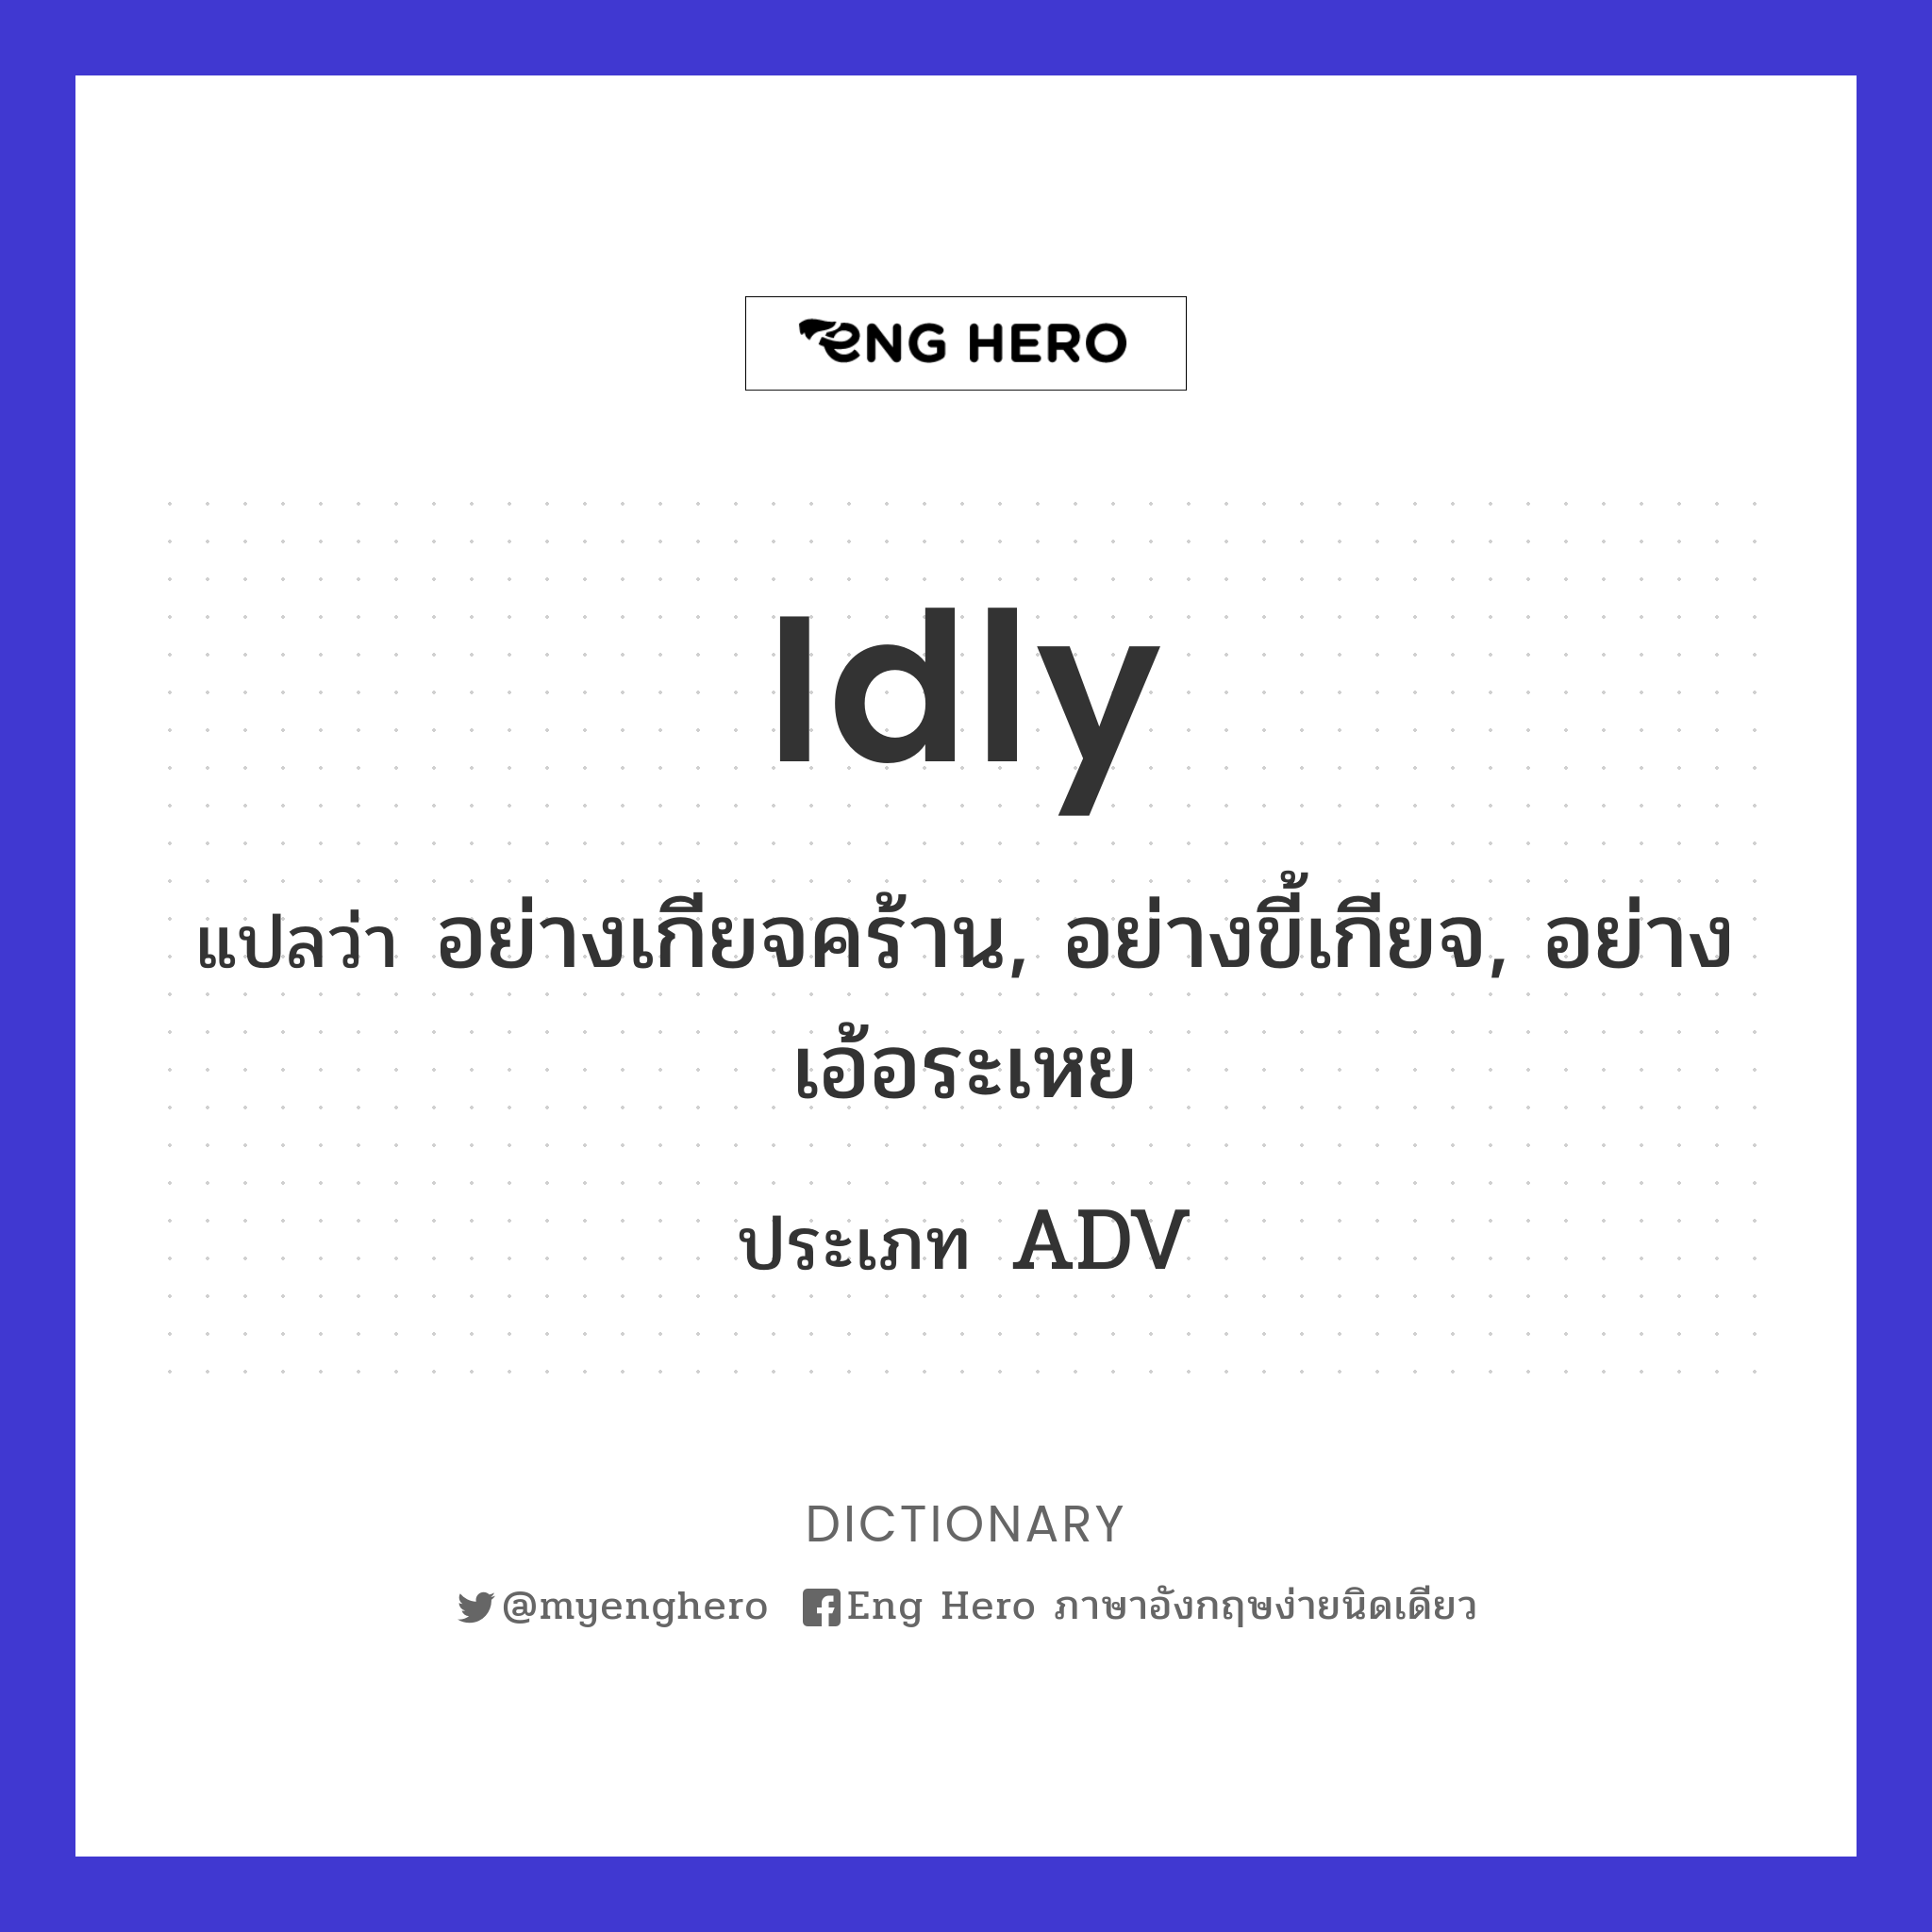 idly